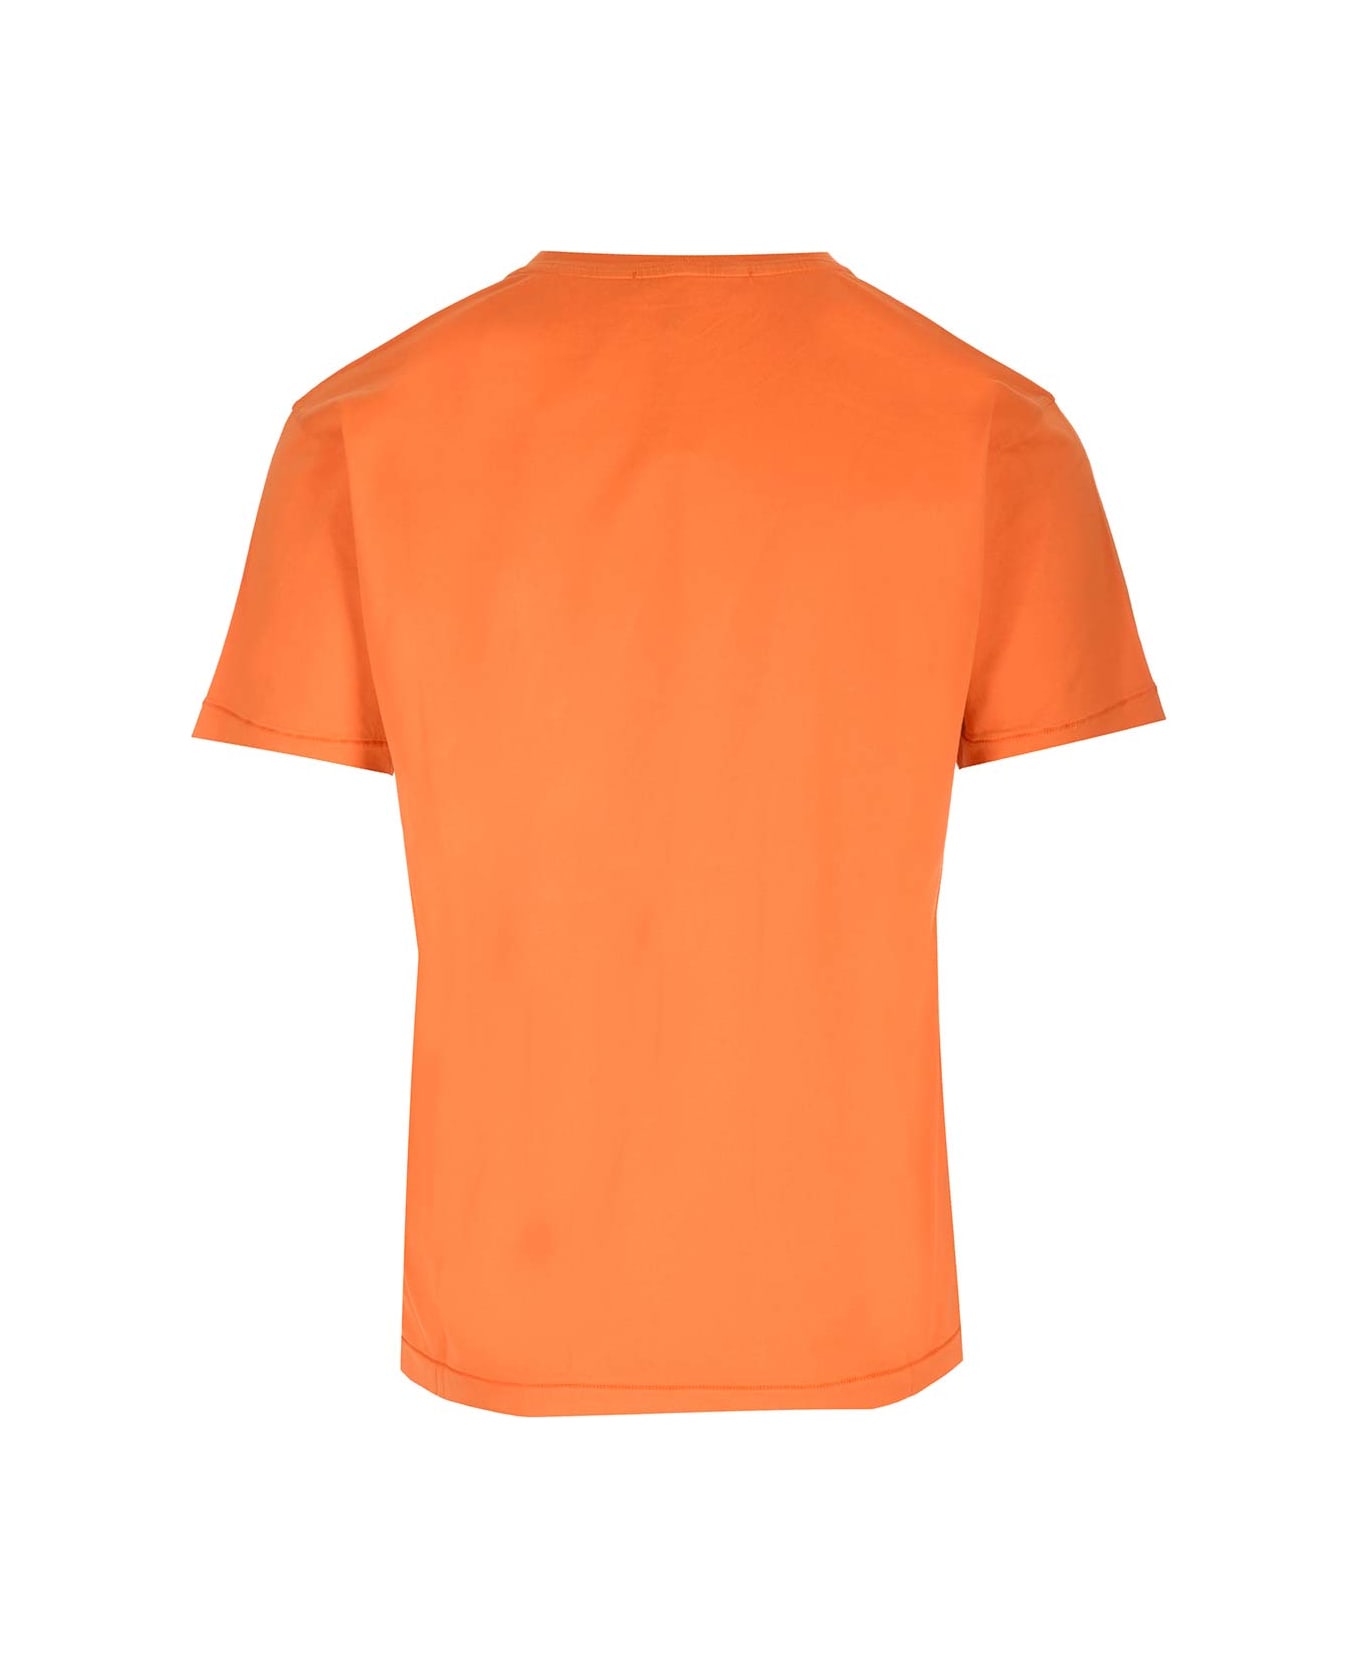 Stone Island Classic Fit T-shirt - Orange